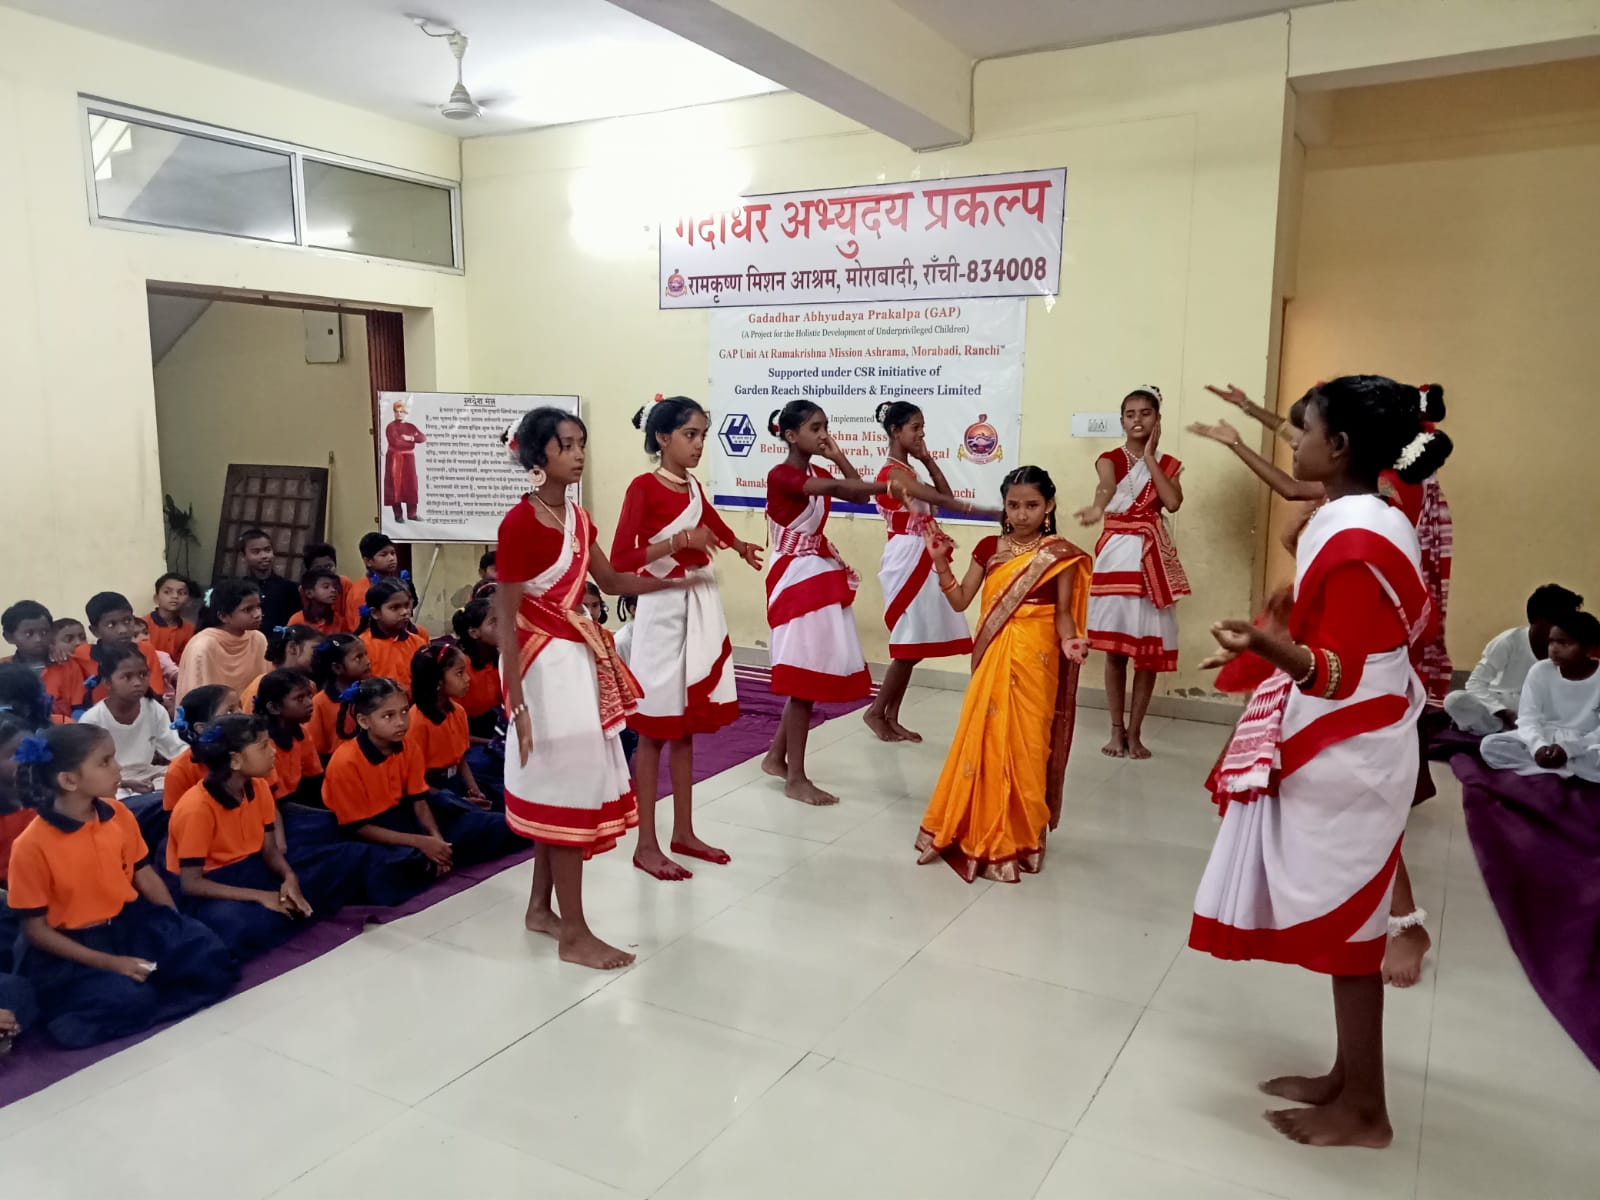 Swachhata Activities organised by GRSE at Gadadhar Abhyudaya Prakalpa Unit, Ranchi, Jharkhand on 14 Oct 23